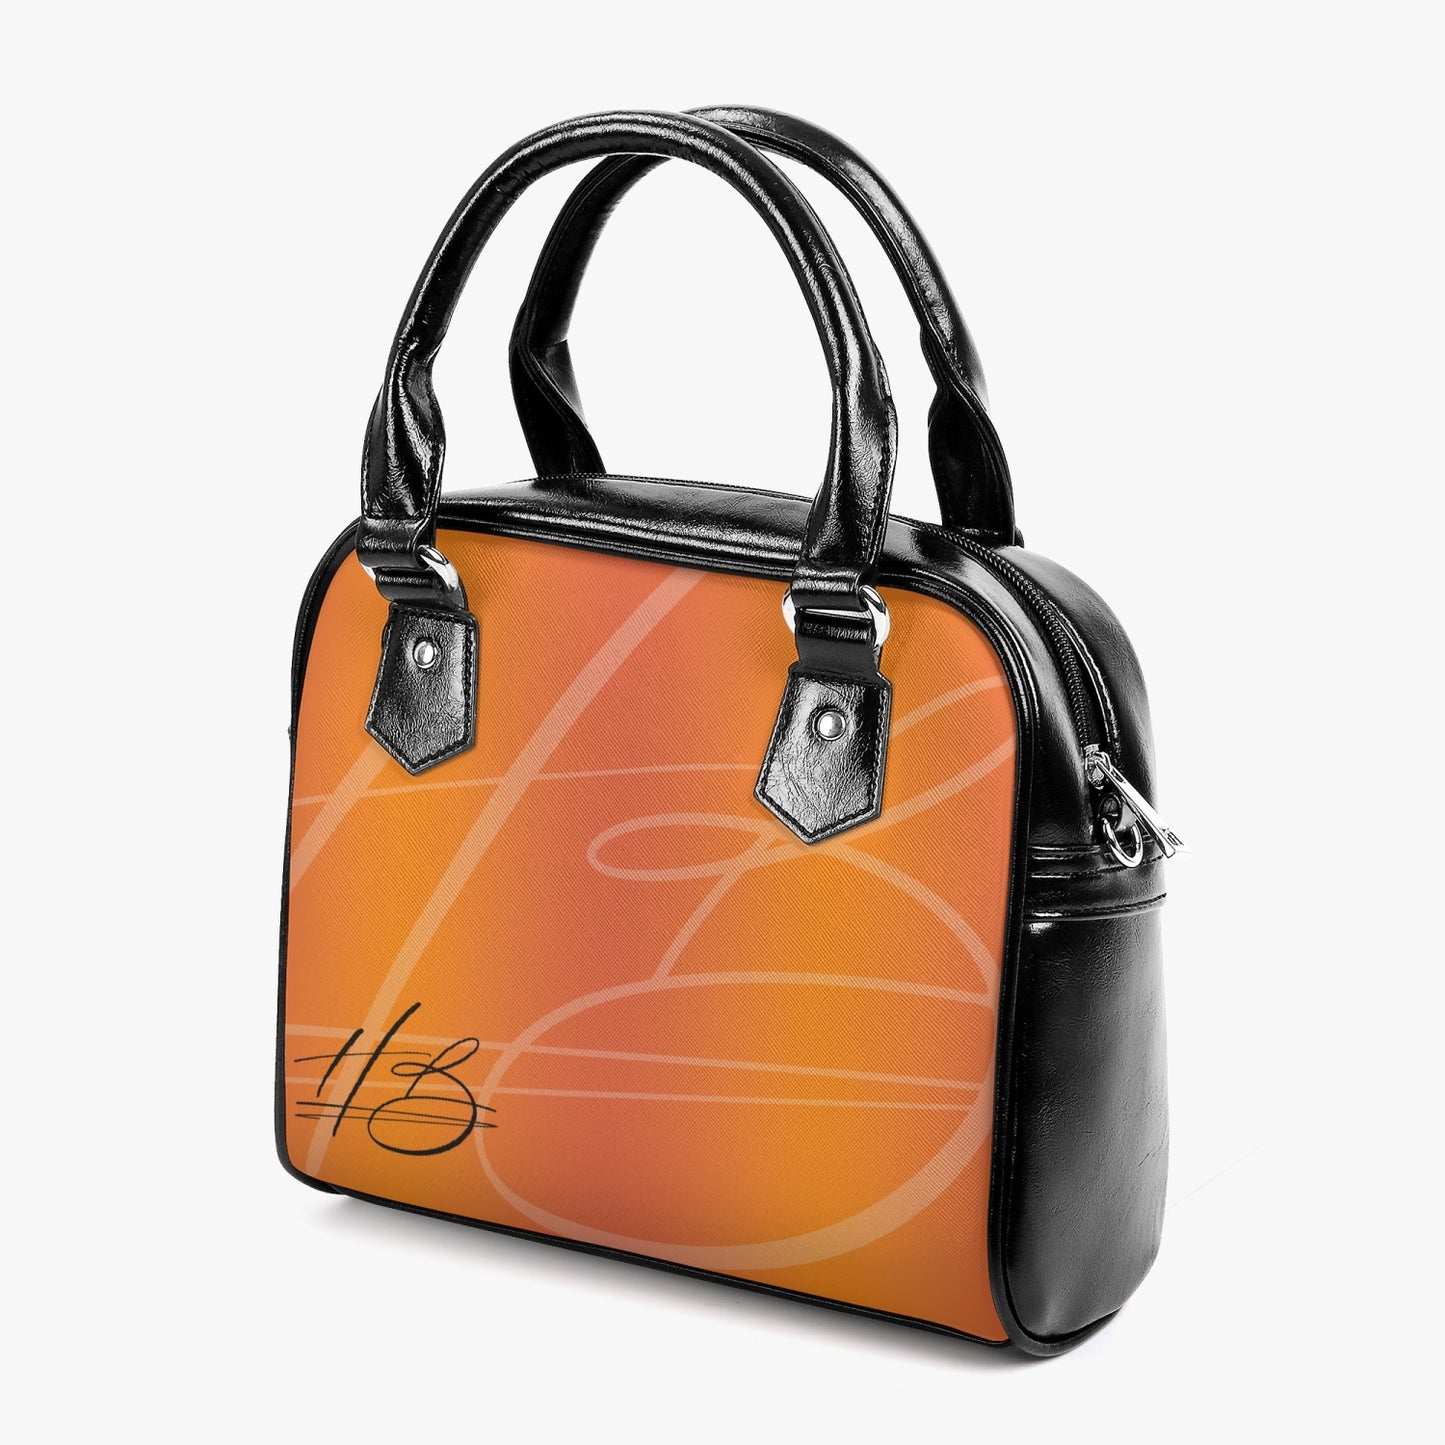 HB Vegan Leather Shoulder Bag - Mandarin